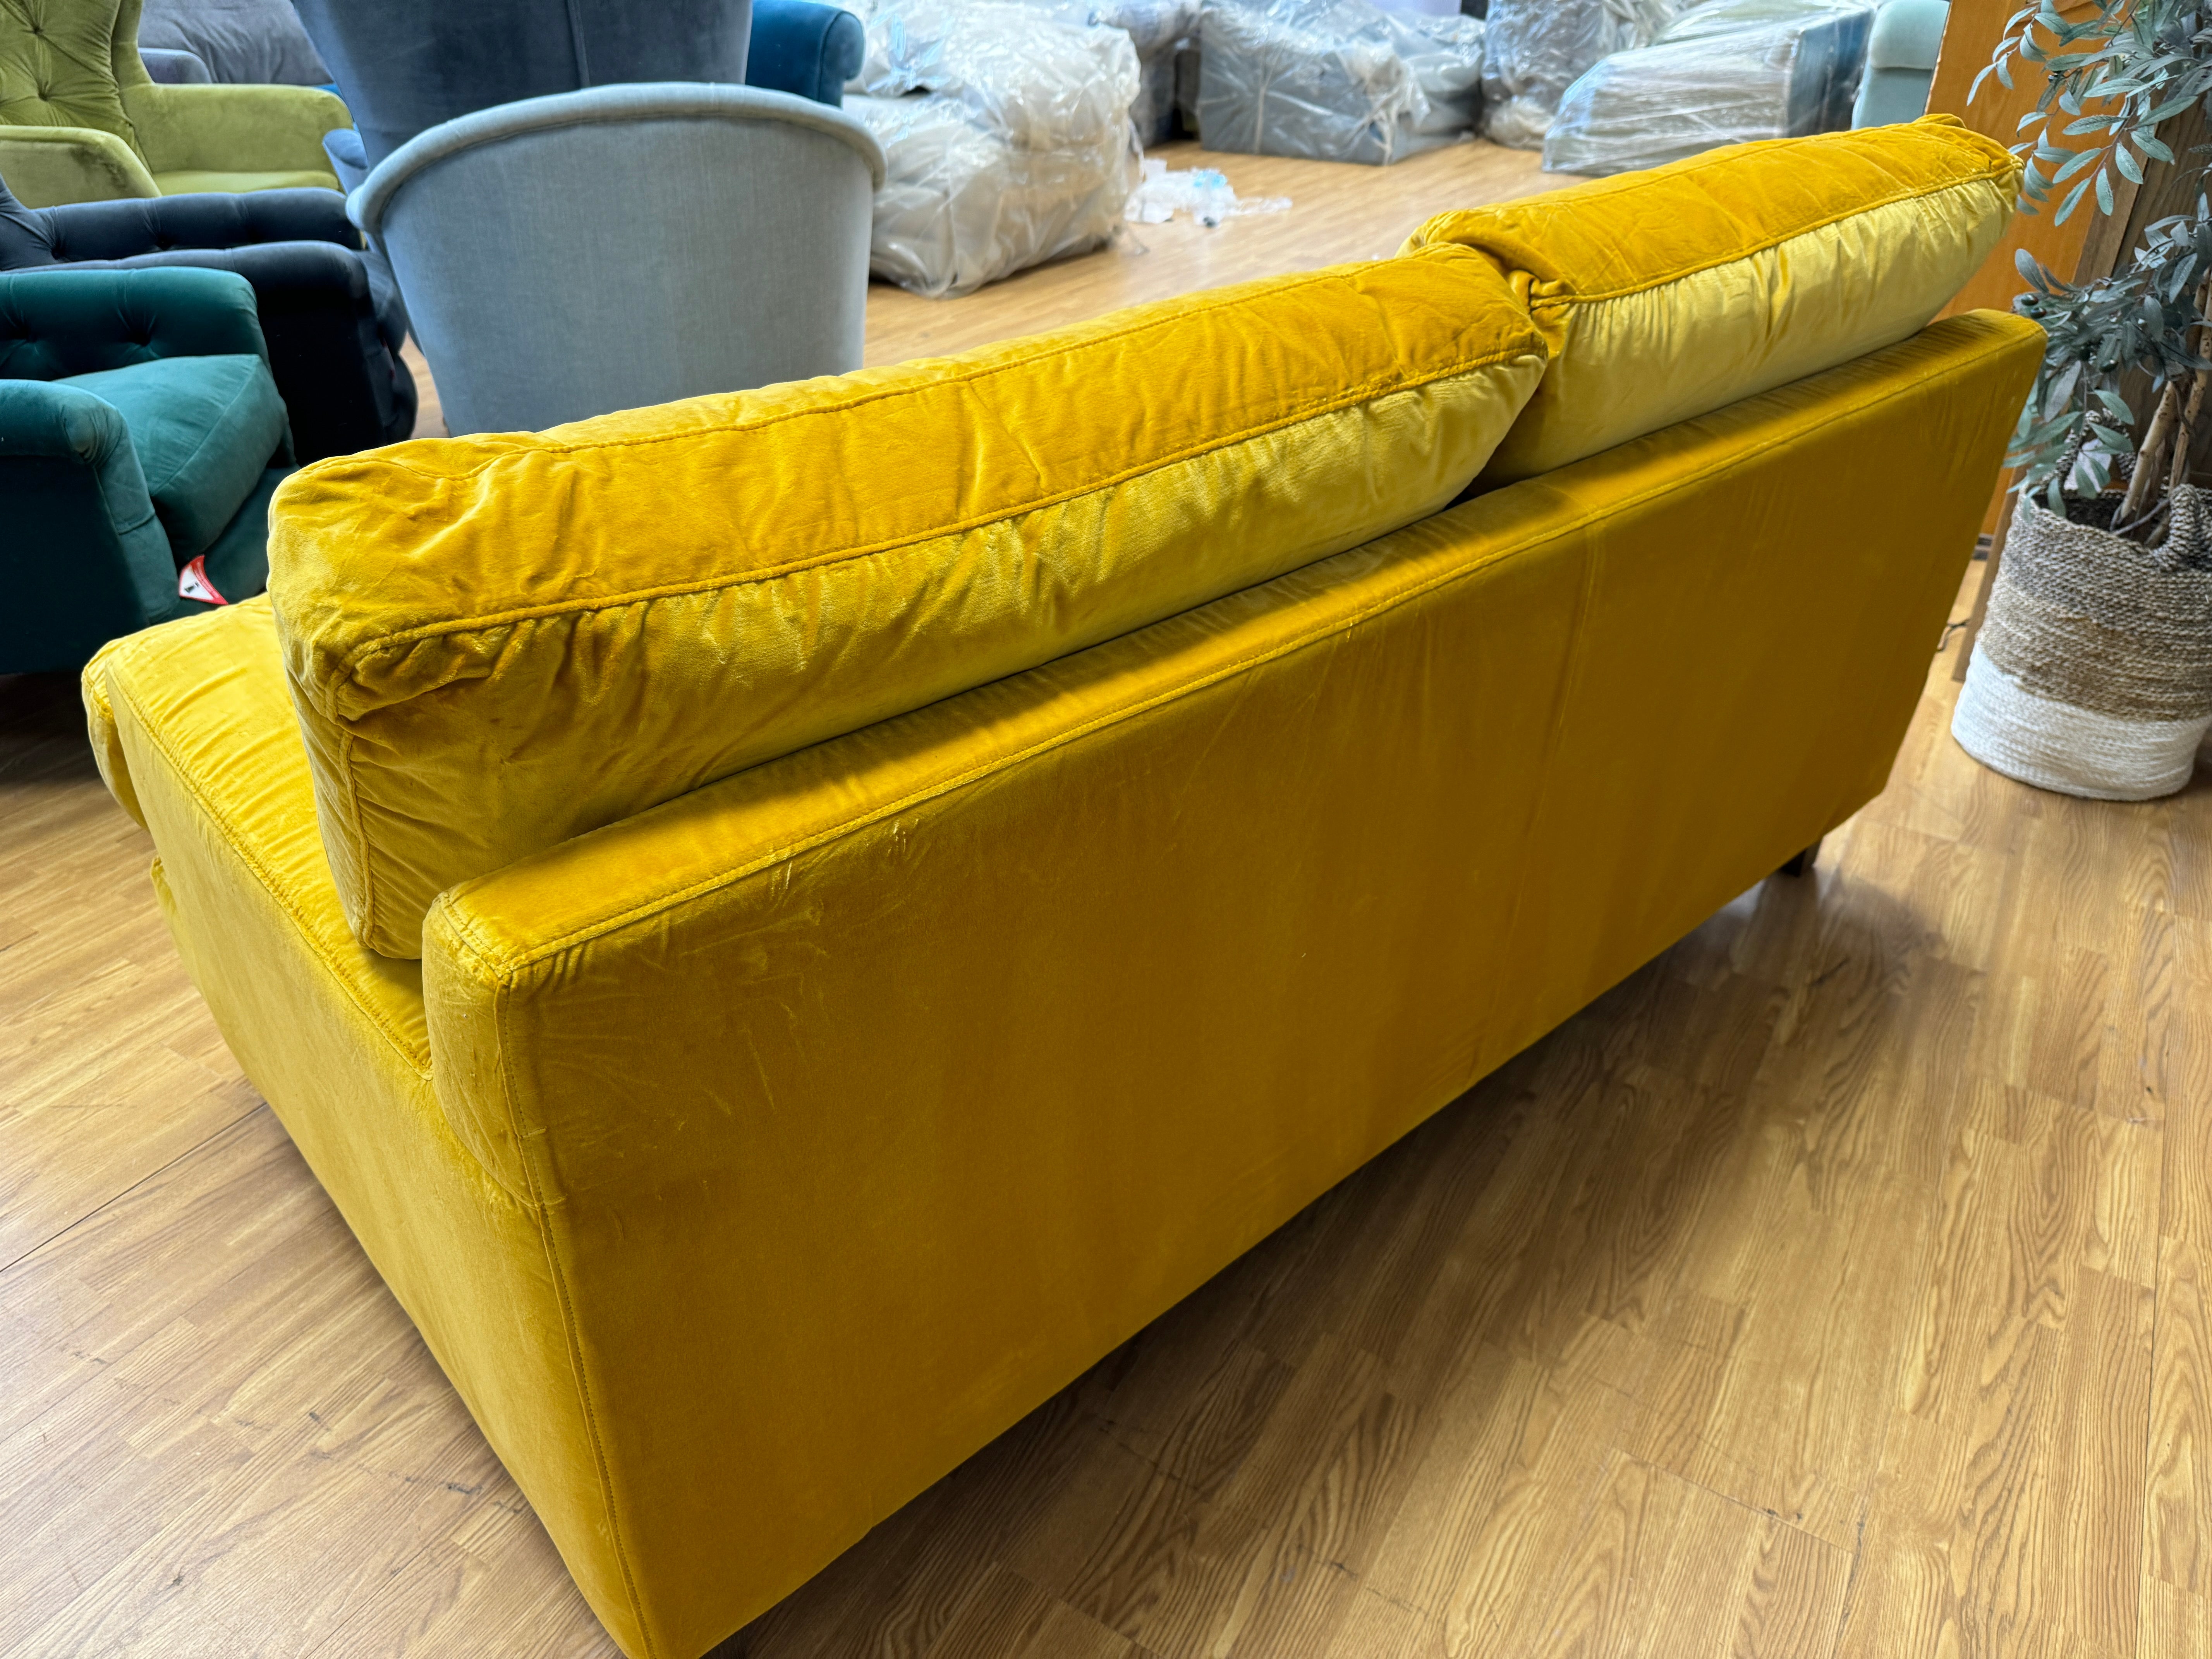 SOFA.COM ISLA 2 Seater sofa Butterscotch Yellow cotton Velvet fabric RRP £2180